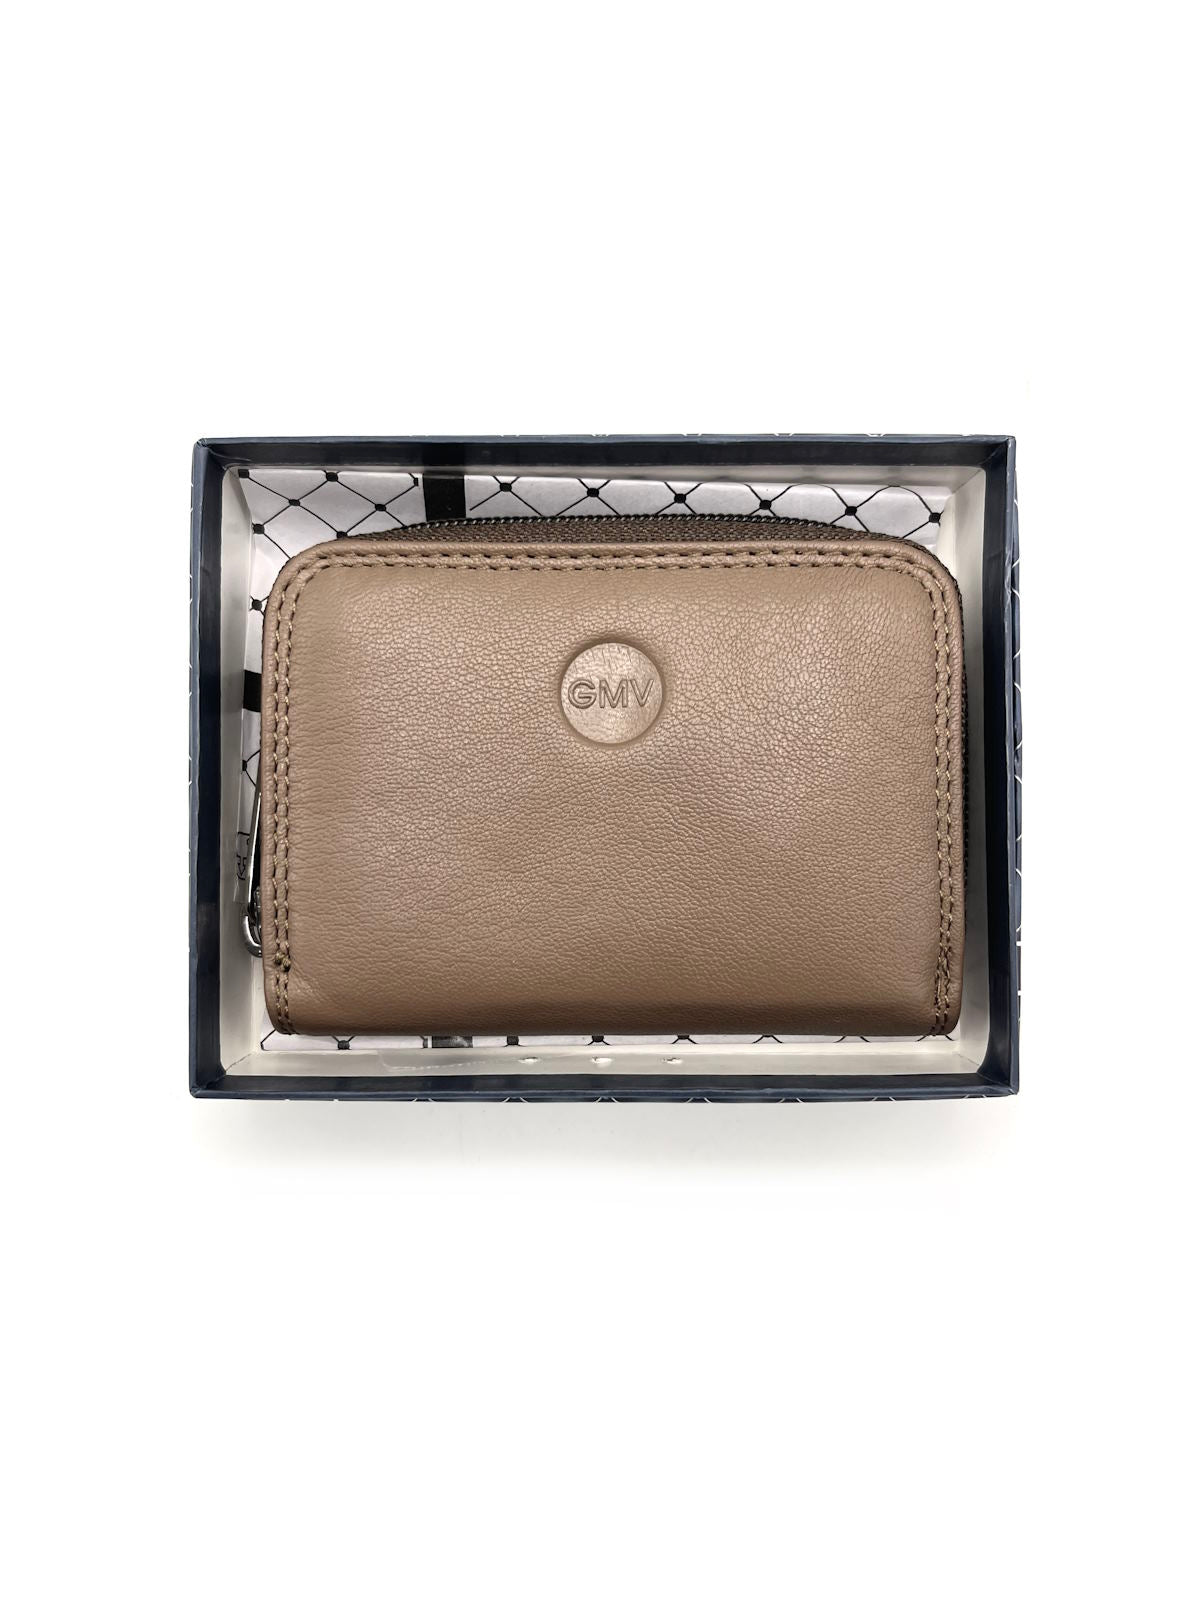 Genuine leather card holder, Brand GMV, art. GMV80-3921